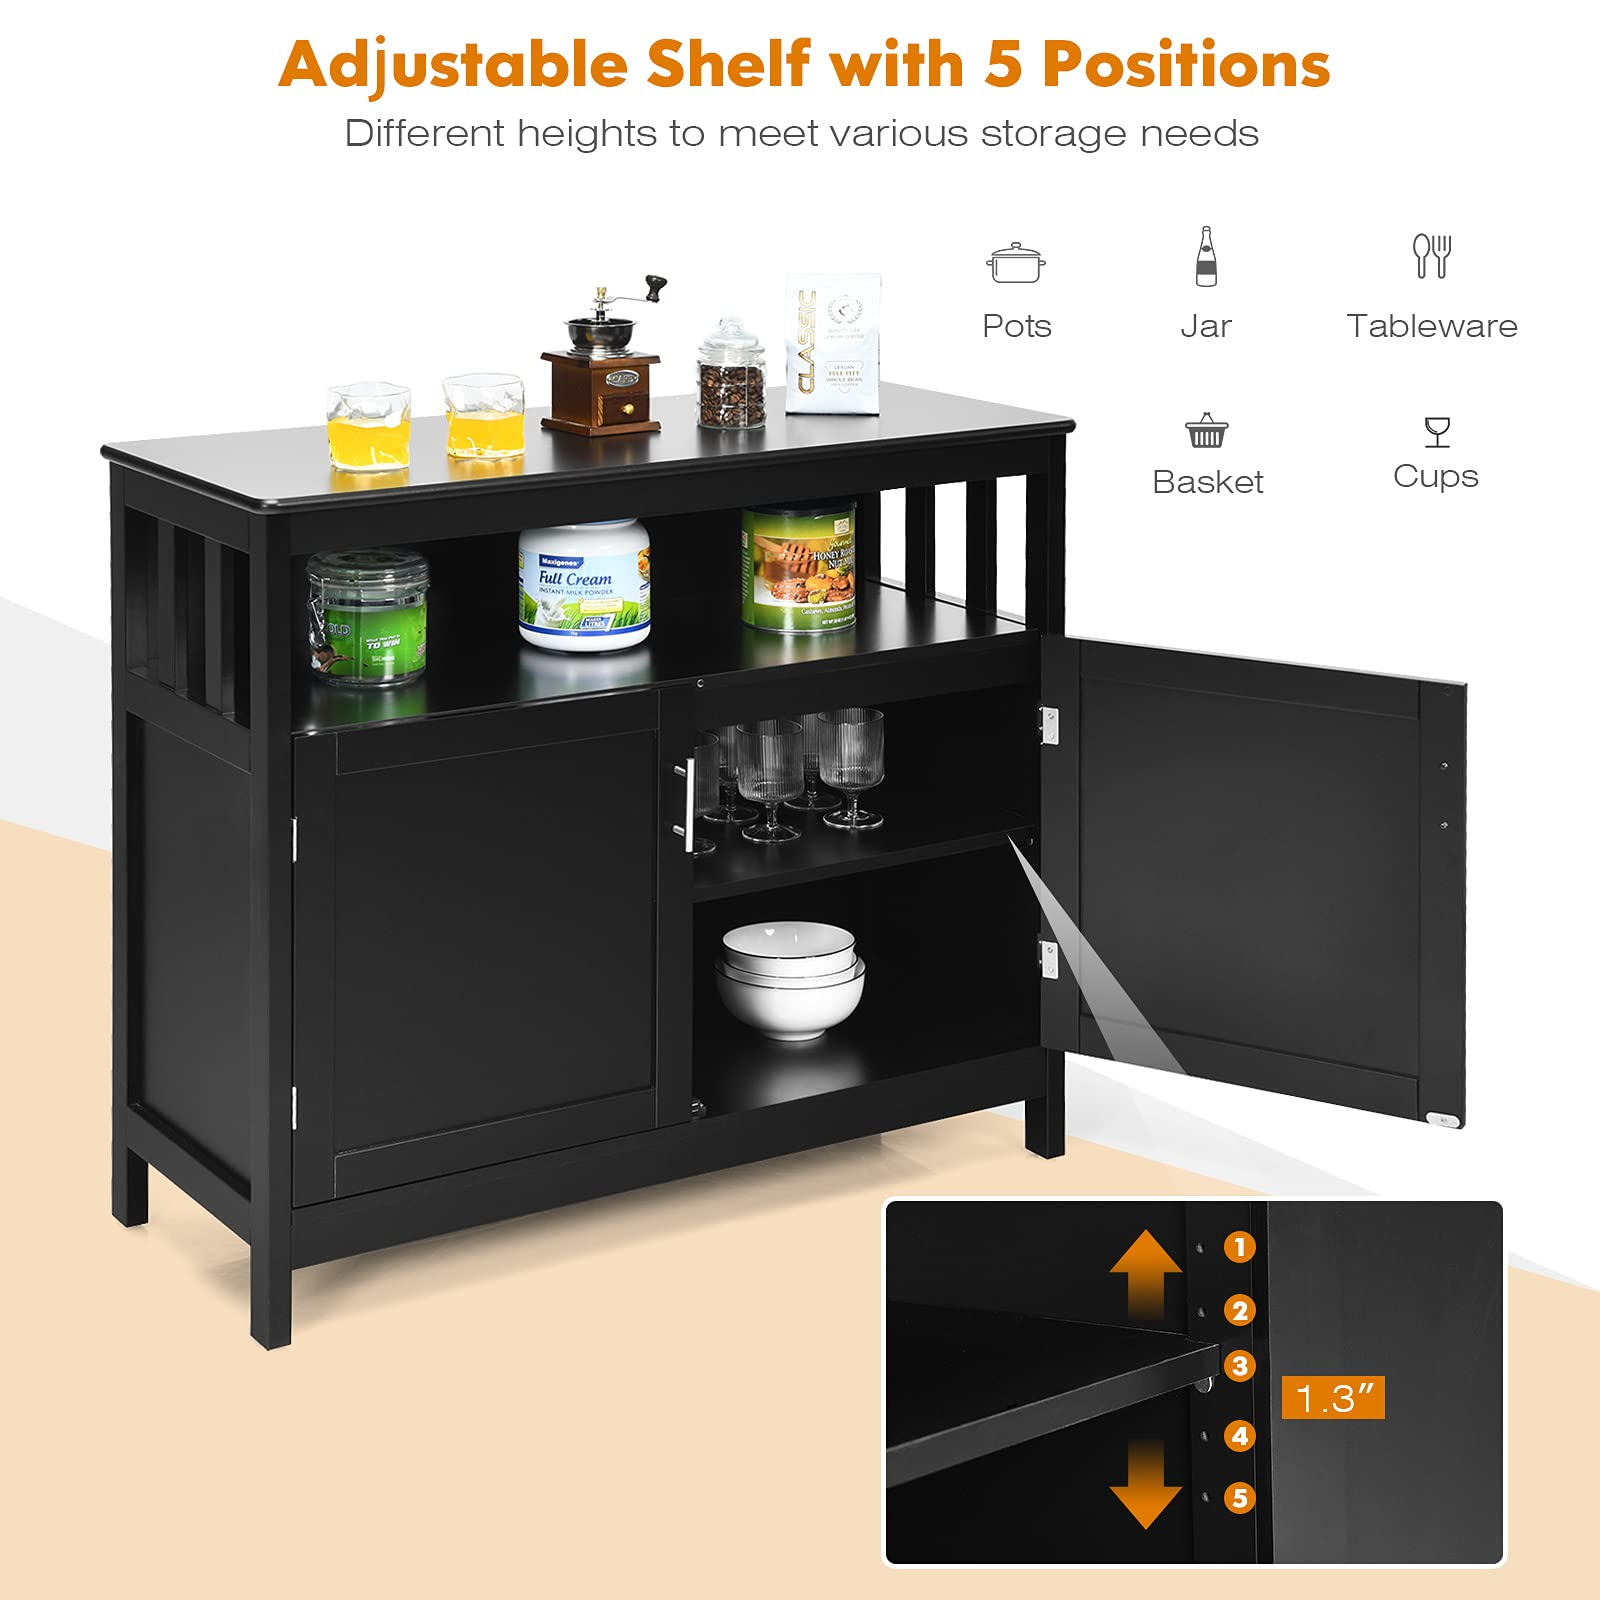 Giantex Kitchen Buffet Sideboard, Wooden Storage Server Cupboard Cabinet